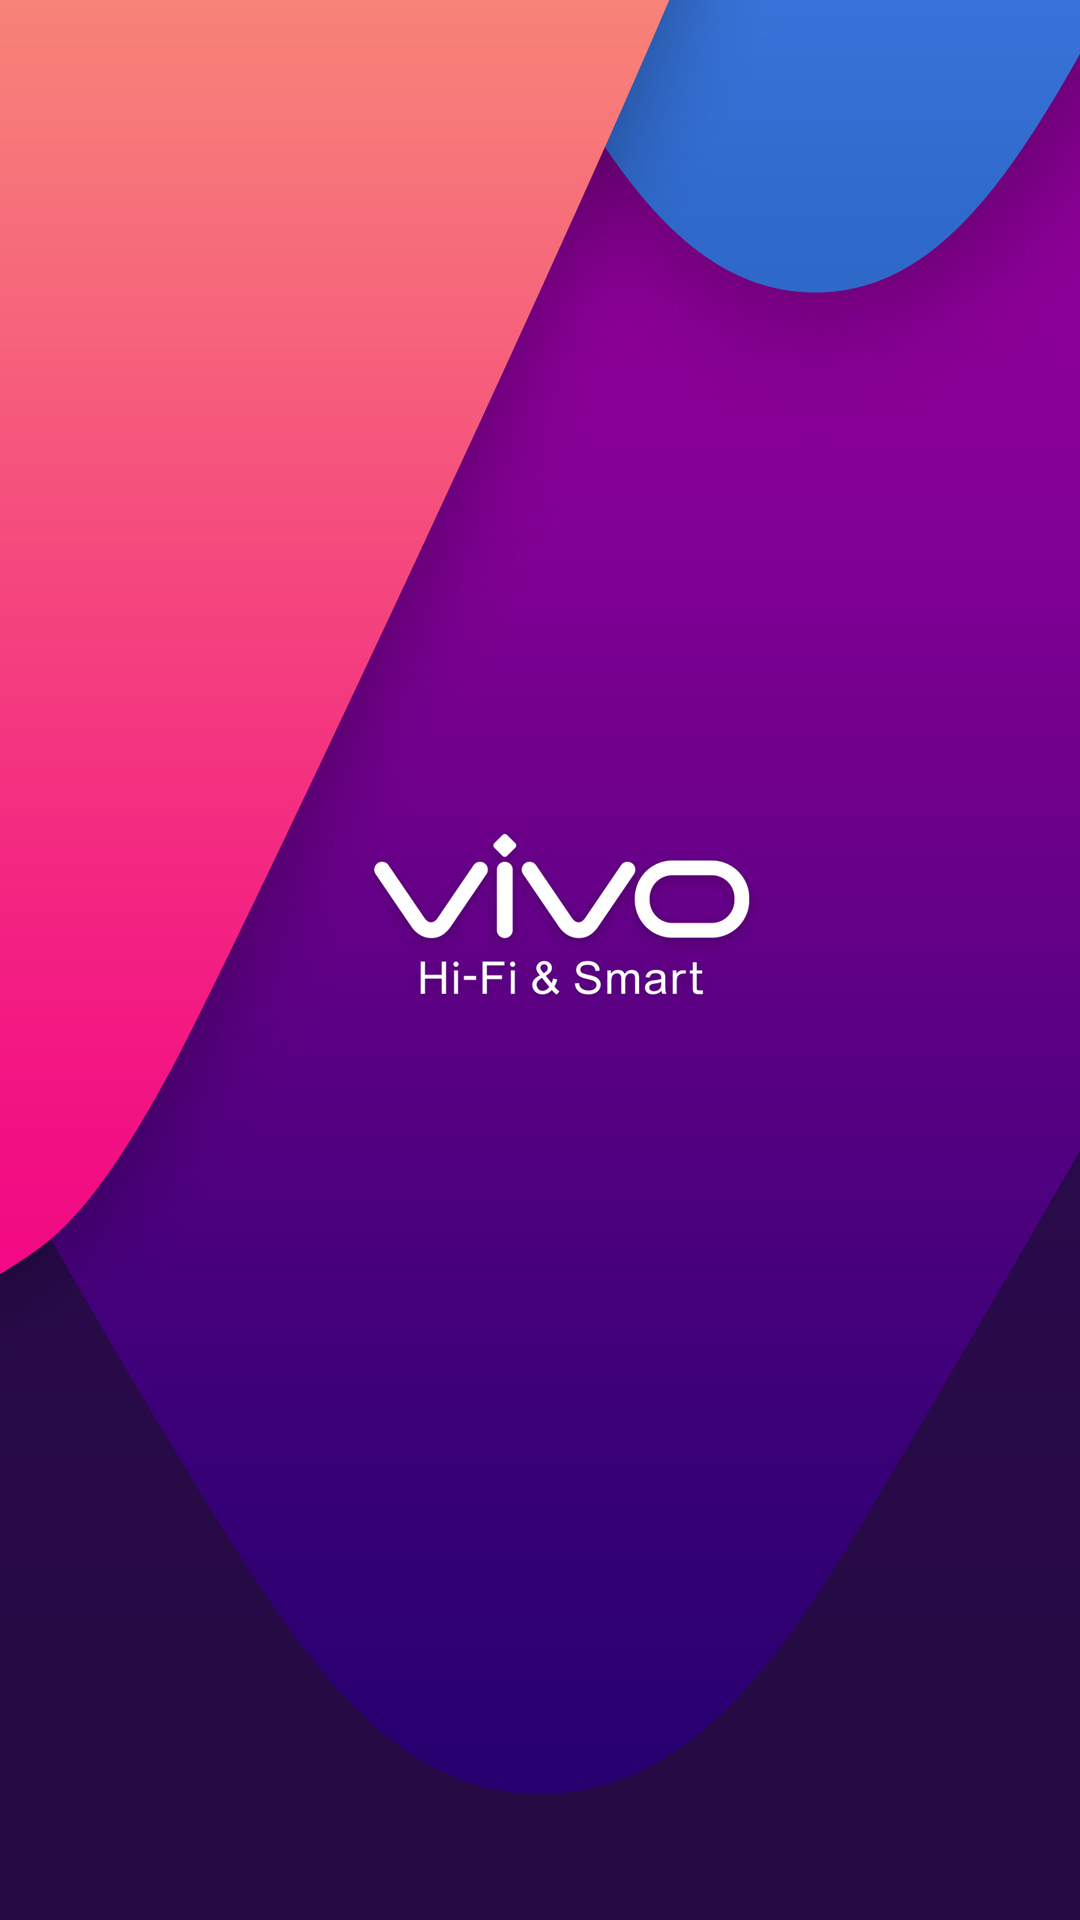 Vivo Hd Wallpaper For Android - Hd Wallpaper Vivo Logo - HD Wallpaper 